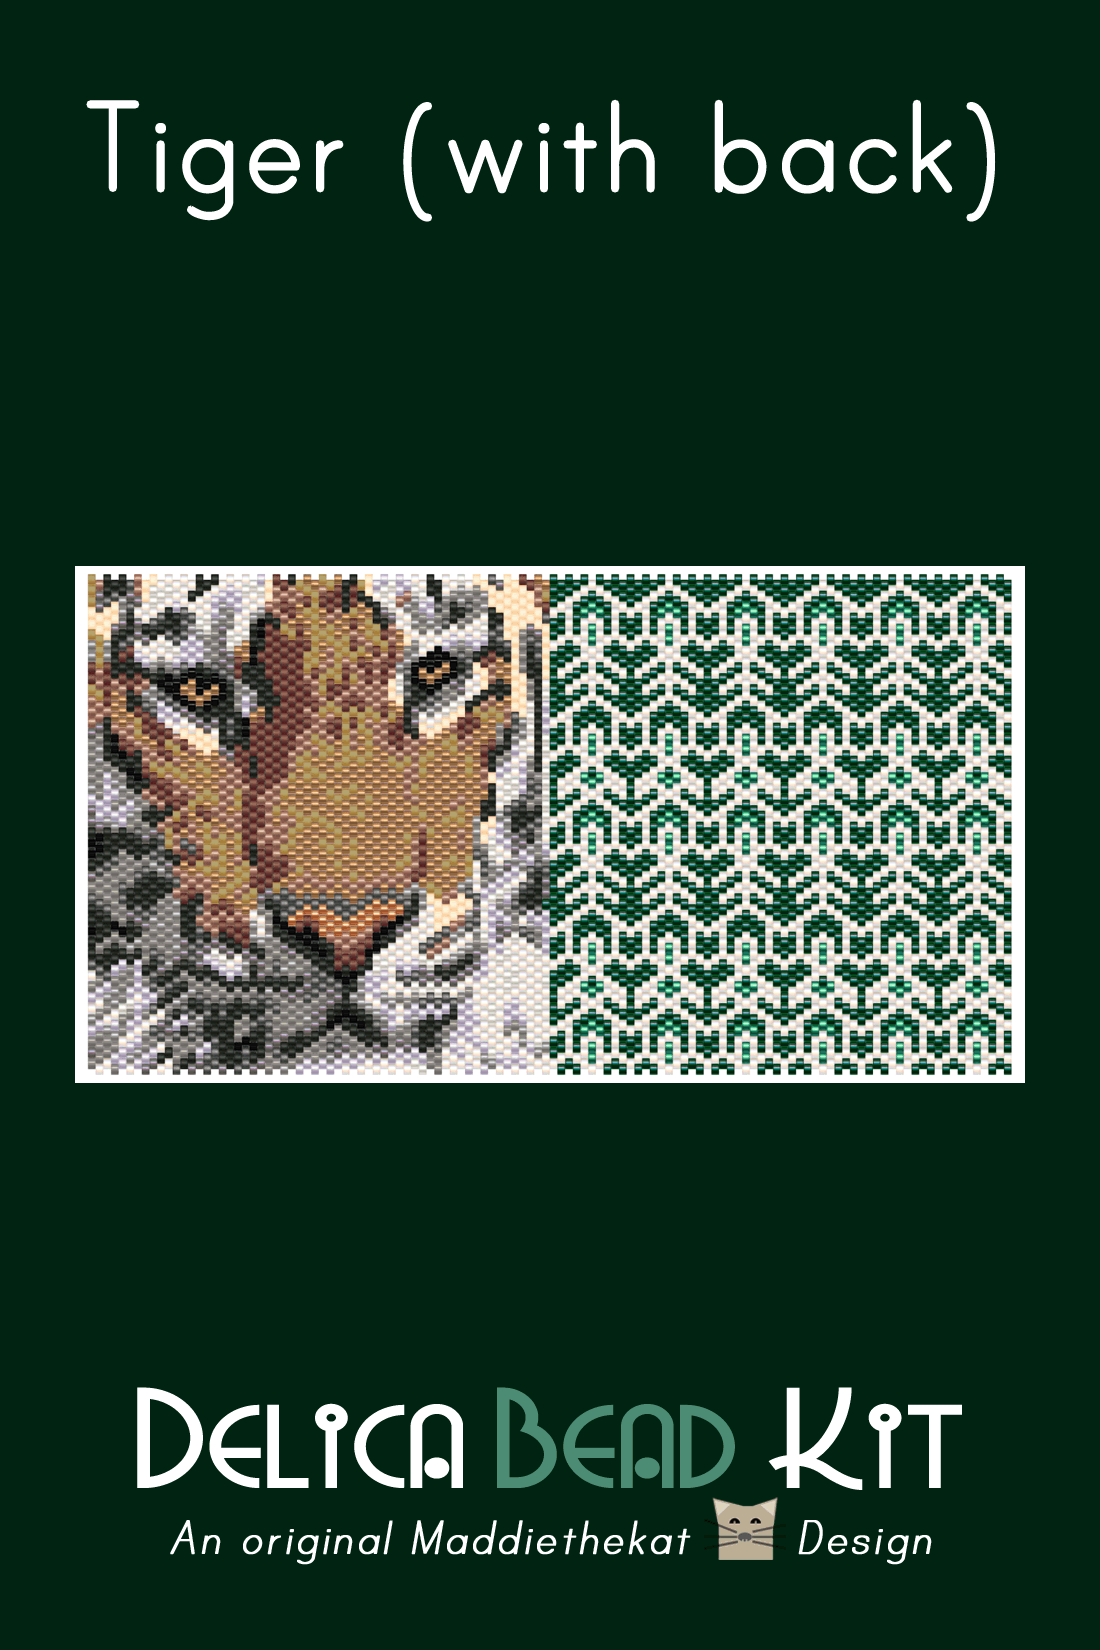 Tiger with Back Peyote Bead Pattern PDF or Bead Kit